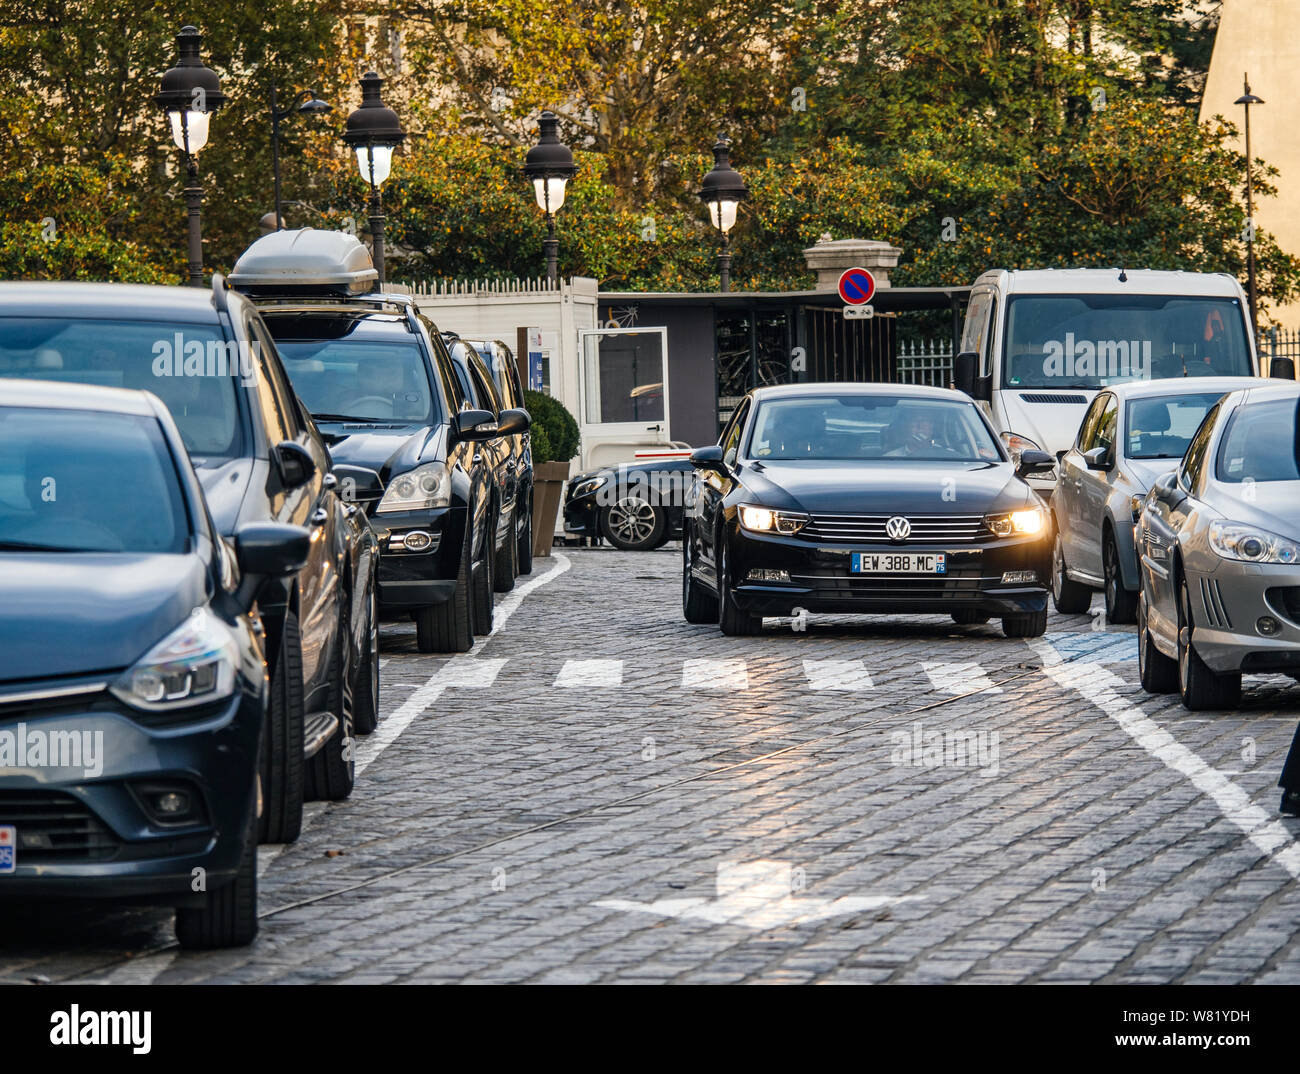 Paris, France - Oct 13, 2018: Cars parking in a row at Depose Minute short  time parking at the entrance of Gare de Est in Paris, France with black  Volkswagen passat car